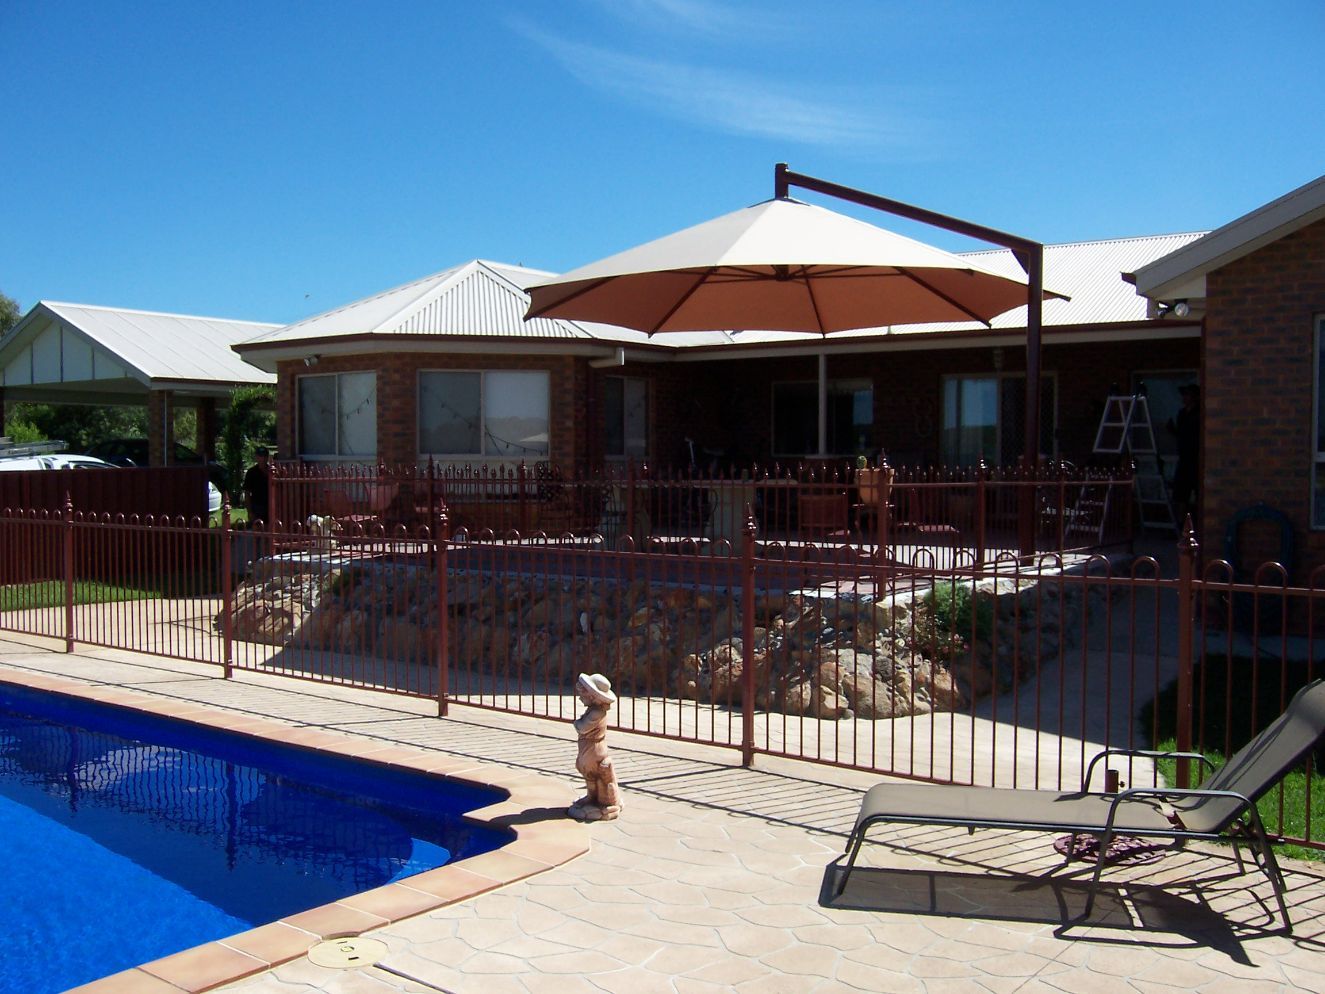 Brown Cantilever Umbrella Covering The Pool — Outdoor Umbrellas in Albury, NSW